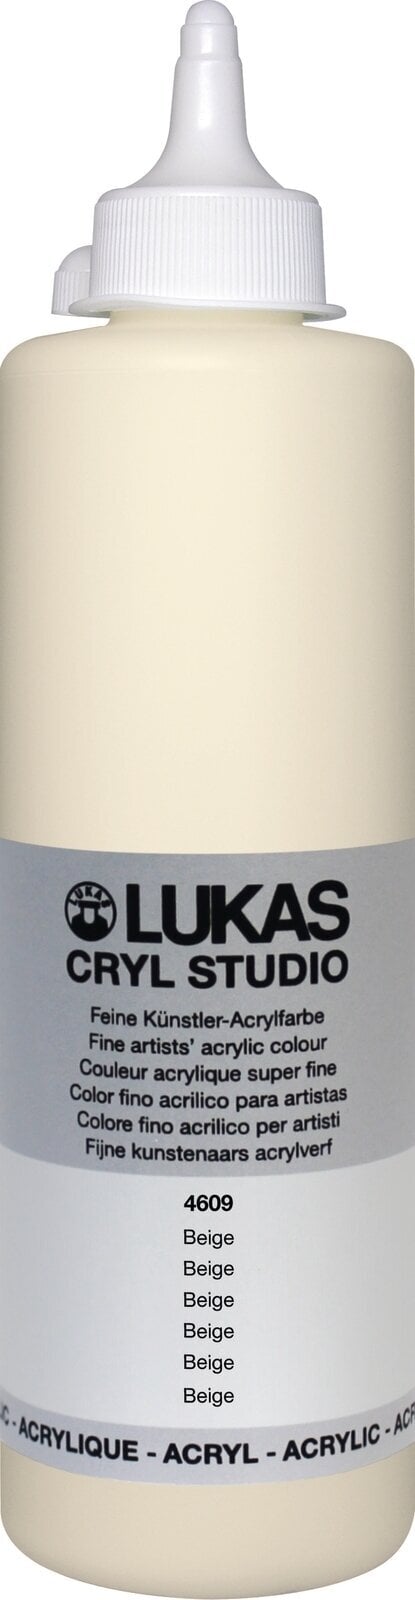 Tinta acrílica Lukas Cryl Studio Plastic Bottle Tinta acrílica Beige 500 ml 1 un.